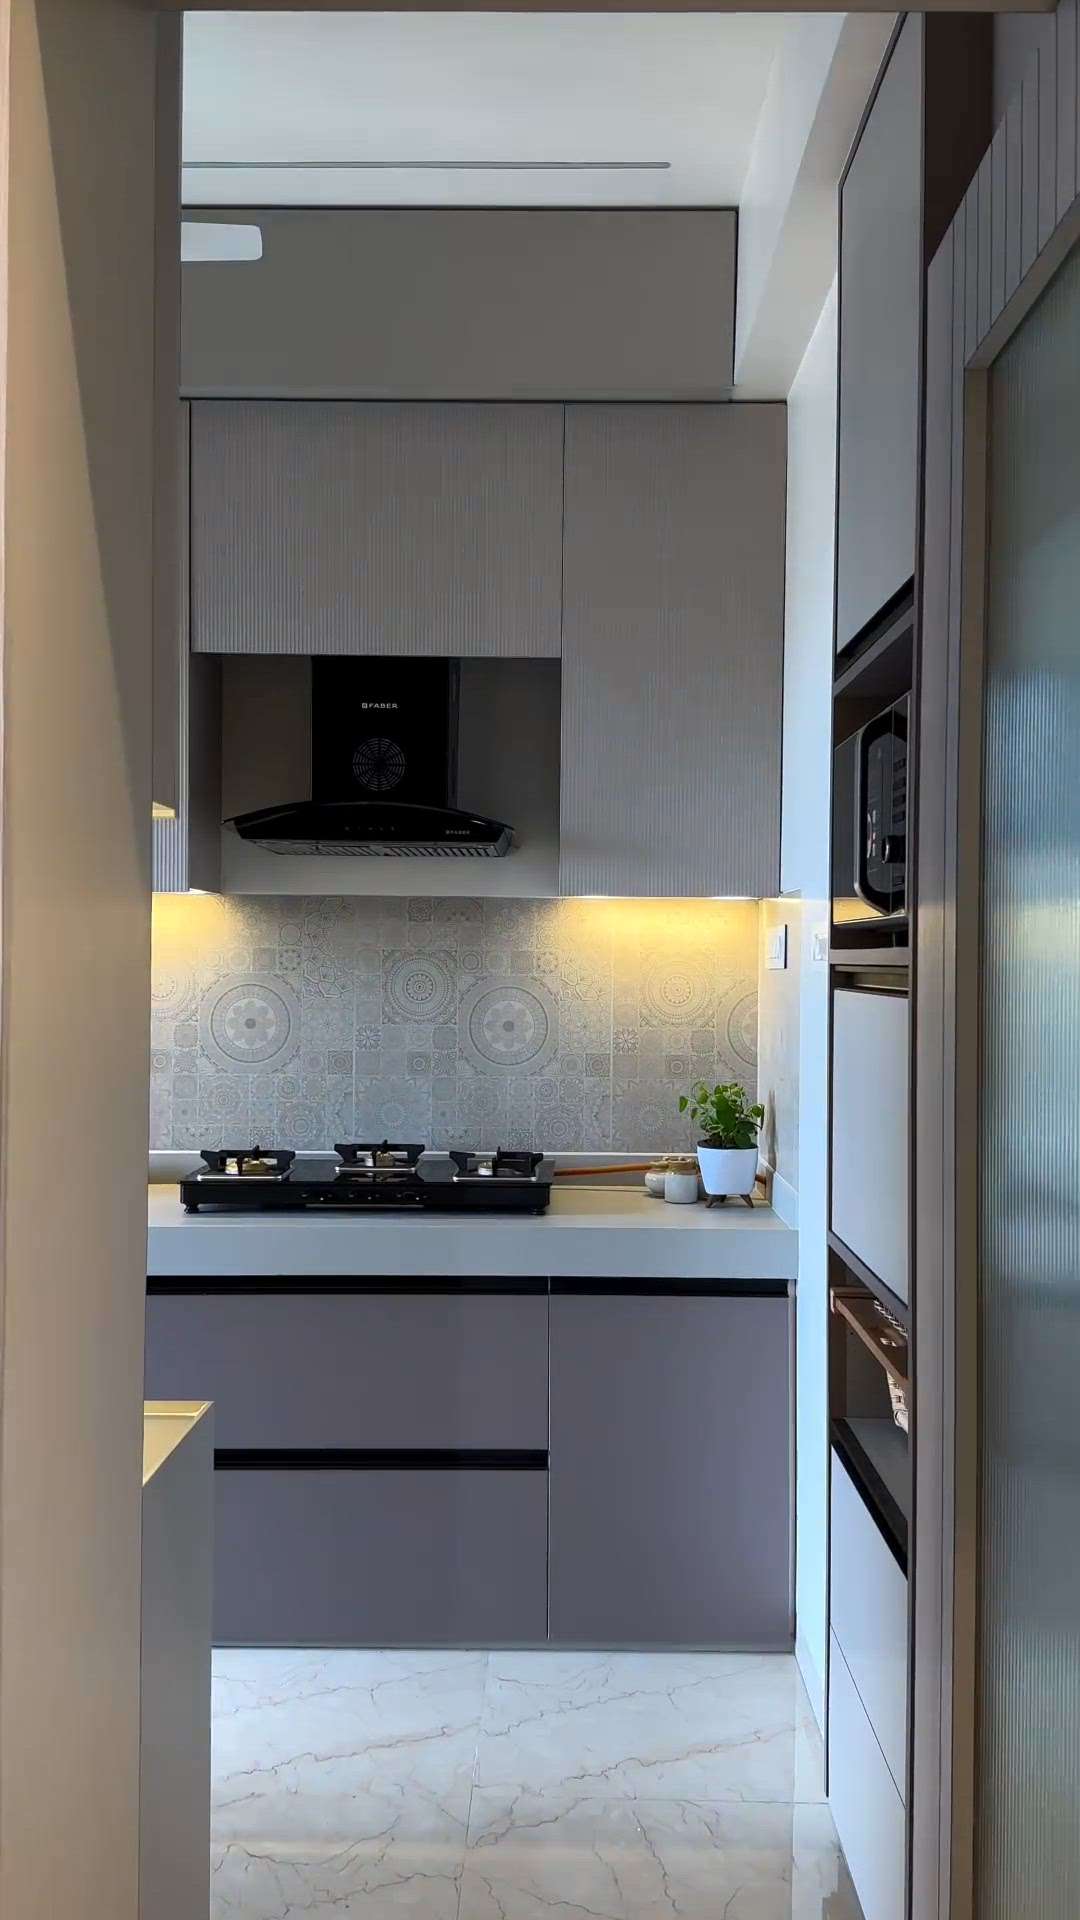 Amazing Modular kitchen latest design by Majestic modular kitchens Pvt Ltd.
#modularkitchendesign
#LShapeKitchen
#faridabad
#palwal
#hodal
#gurgaon
#kitchenmanufecturer
#kitchenmakeover
#kitchenmanufacturer
#ACRYLICKITCHEN
#HIGHGLOSSKITCHEN
#STAINLESSSTEELKITCHENS
#livspacefaridabad
#livspace
#modular_kitchen
#latestkitchendesign
#kitchendesign
#ModularKitchen
#interior_designer_in_faridabad
#palwal
#kitchencabinets
WWW.MAJESTICINTERIORS.CO.IN
9911692170